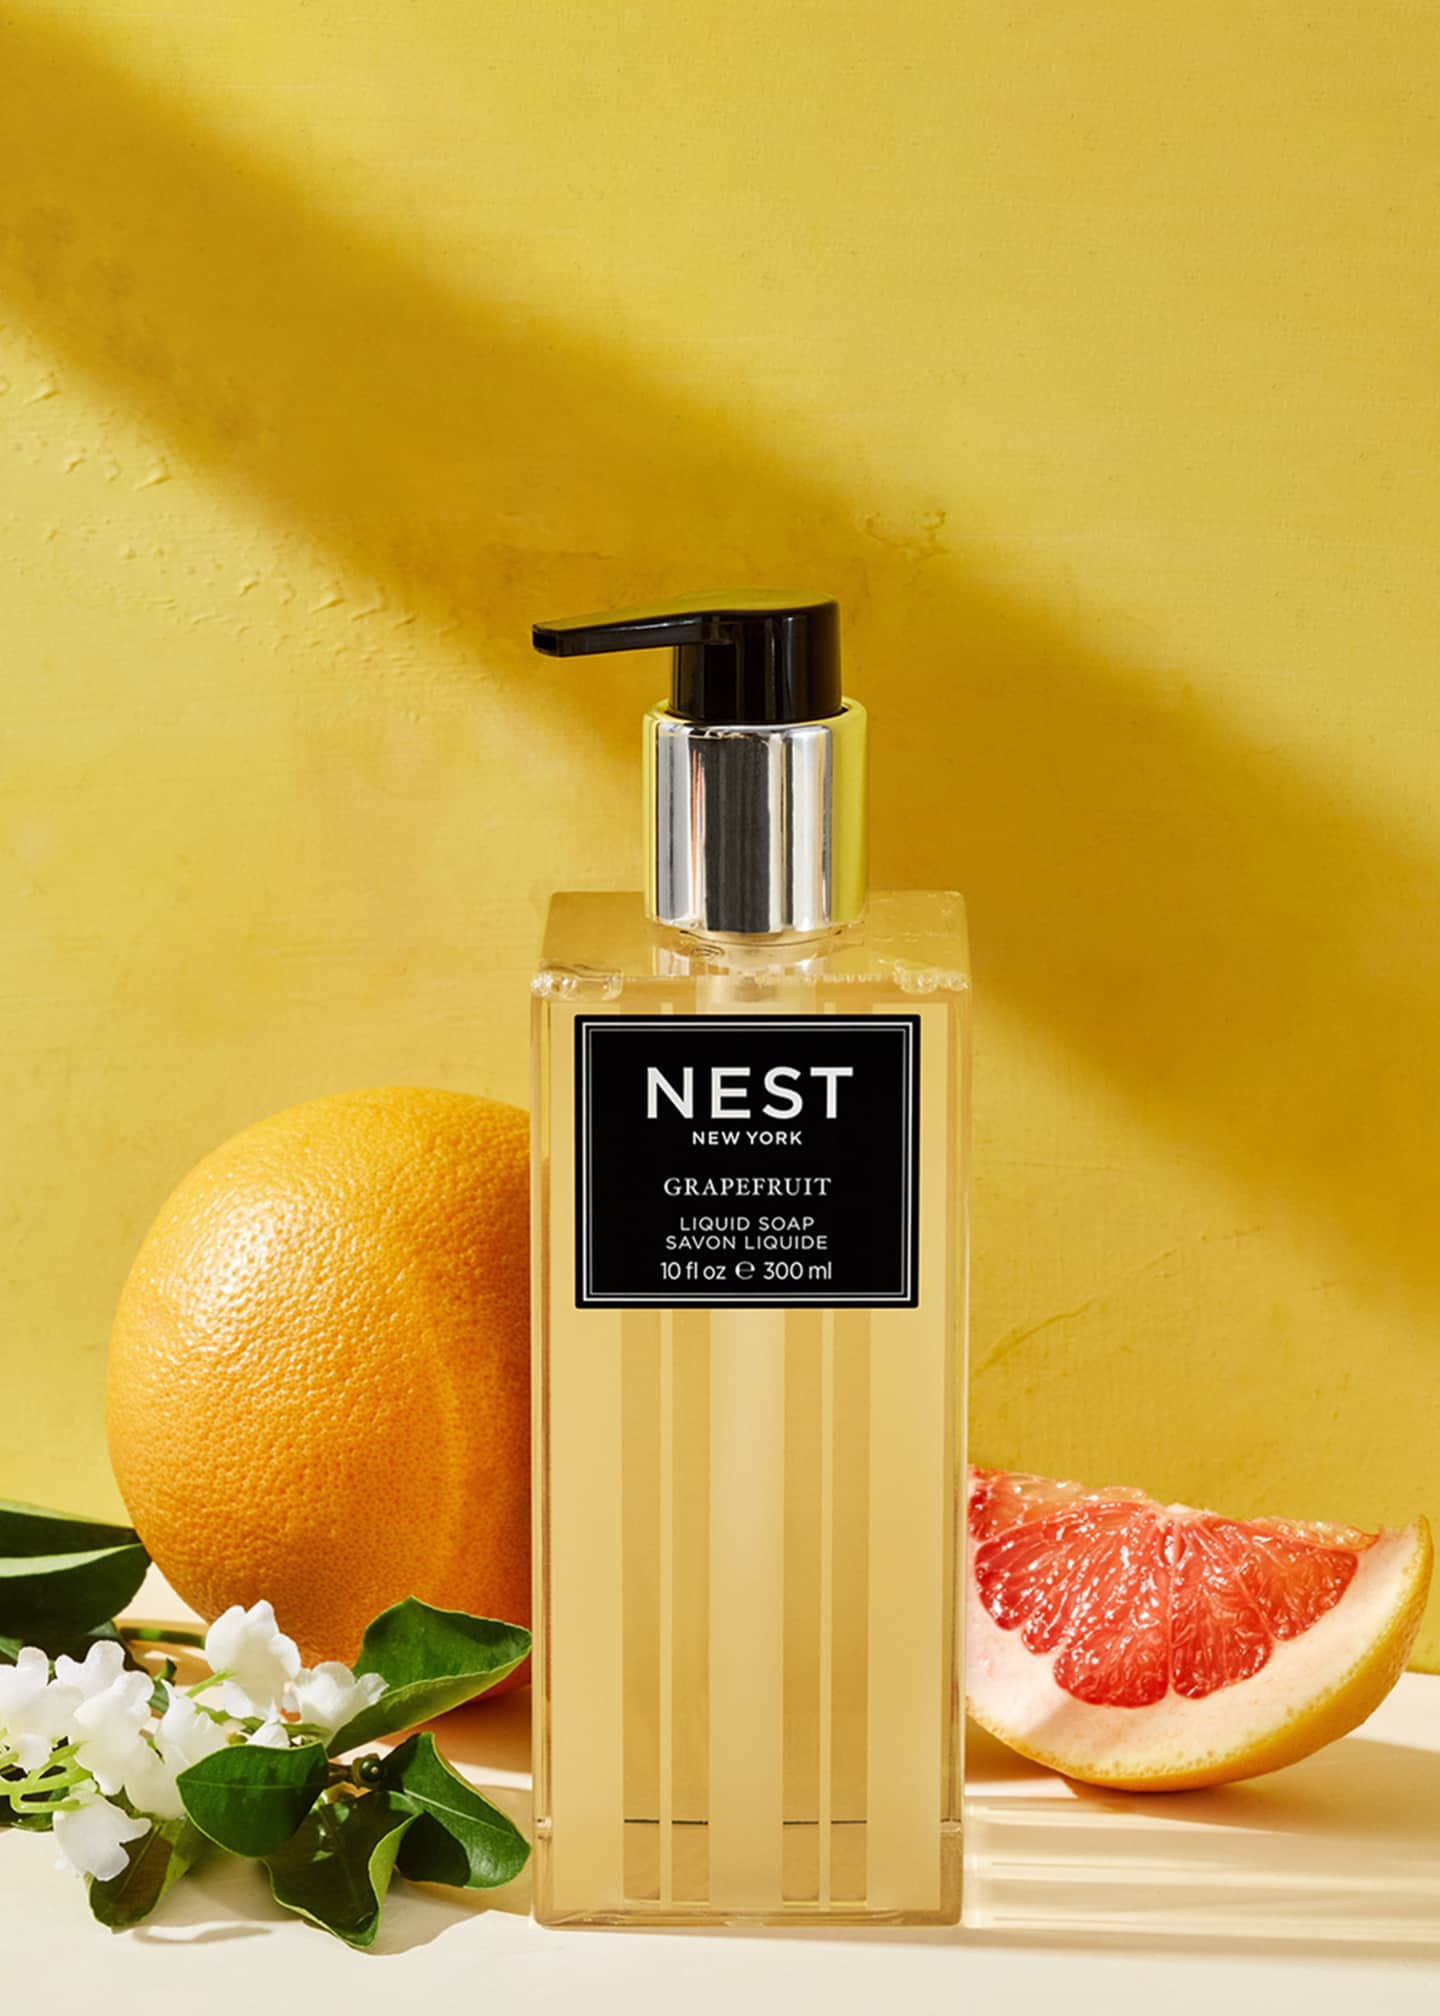 NEST New York 10 oz. Grapefruit Liquid Soap Image 2 of 4